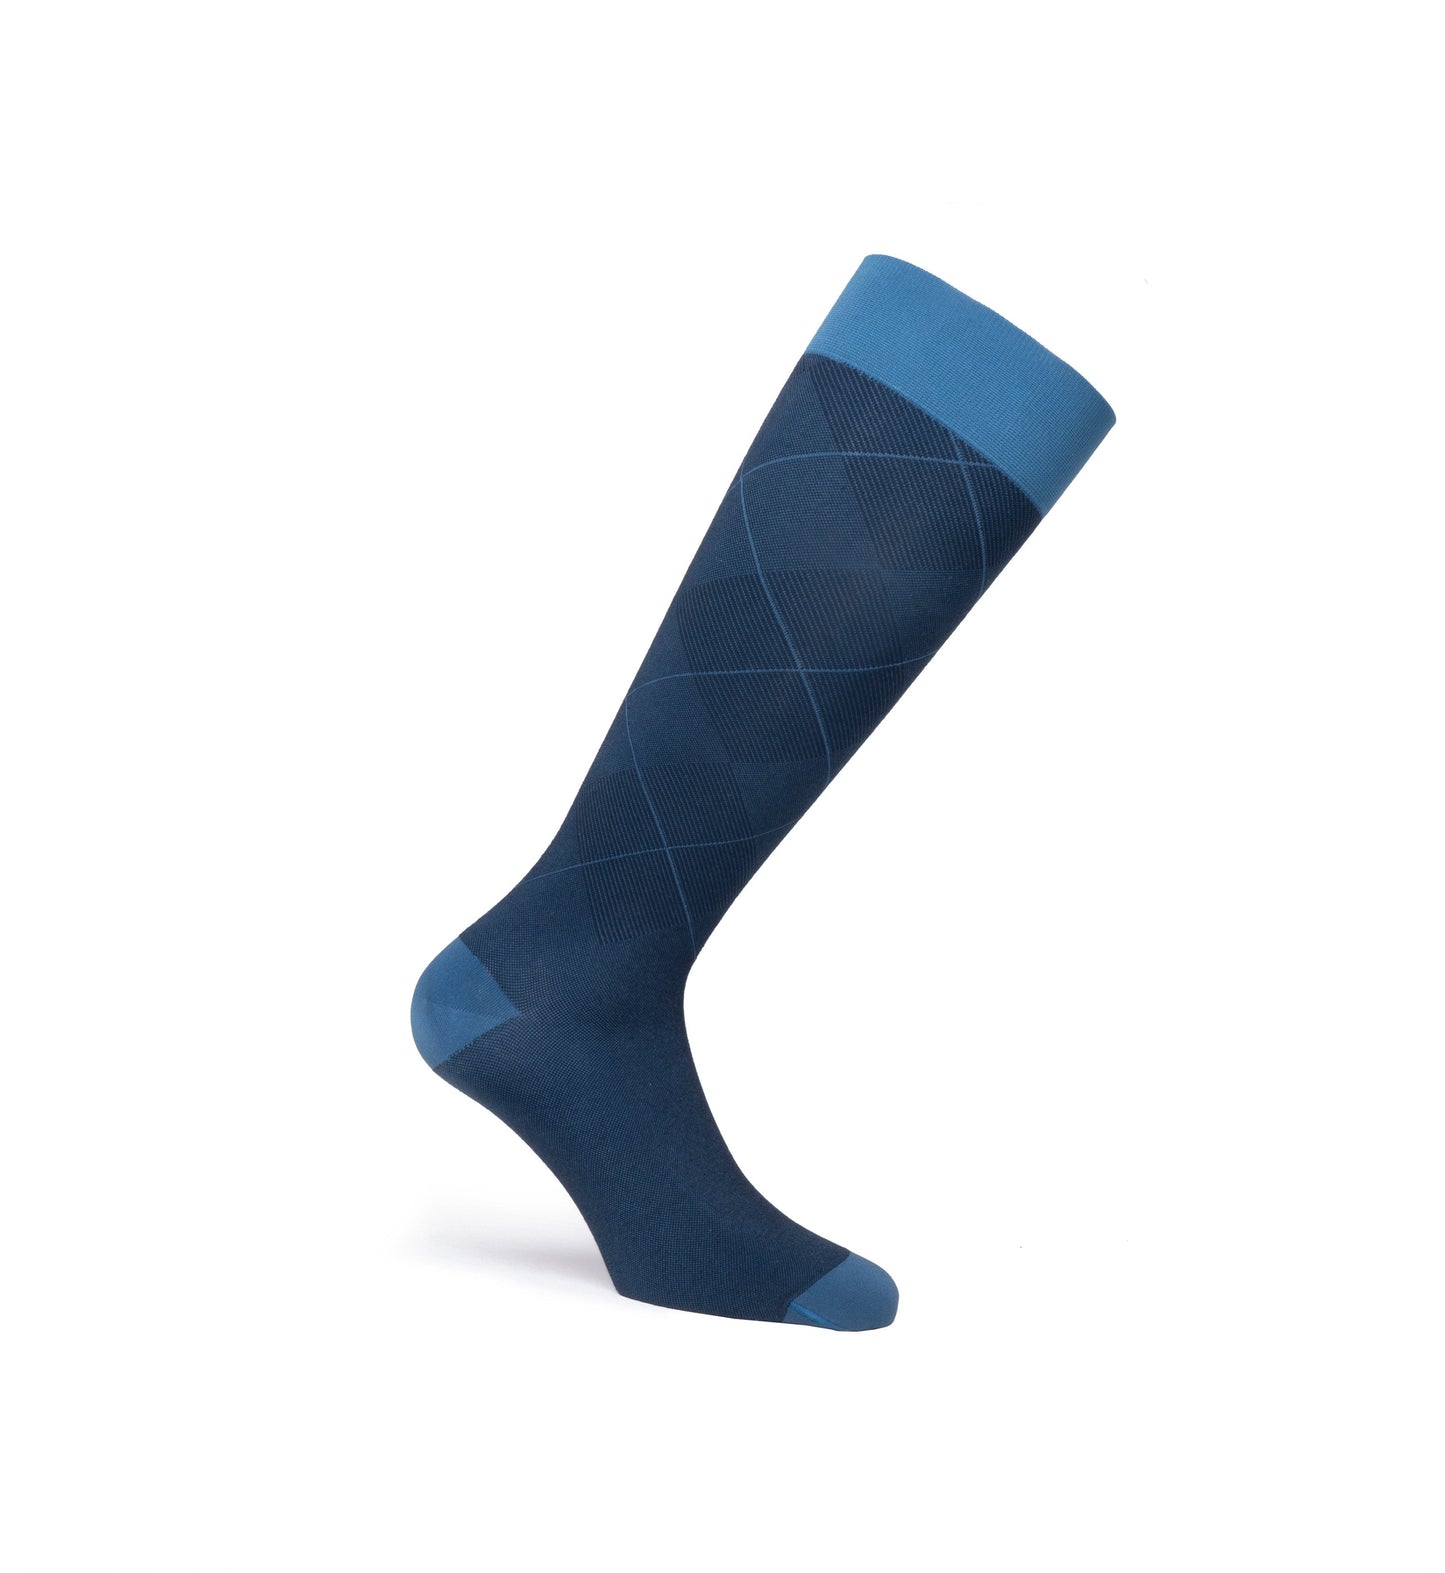 JOBST Casual Pattern Compression Socks 15-20 mmHg, Knee High, Closed Toe Long Length